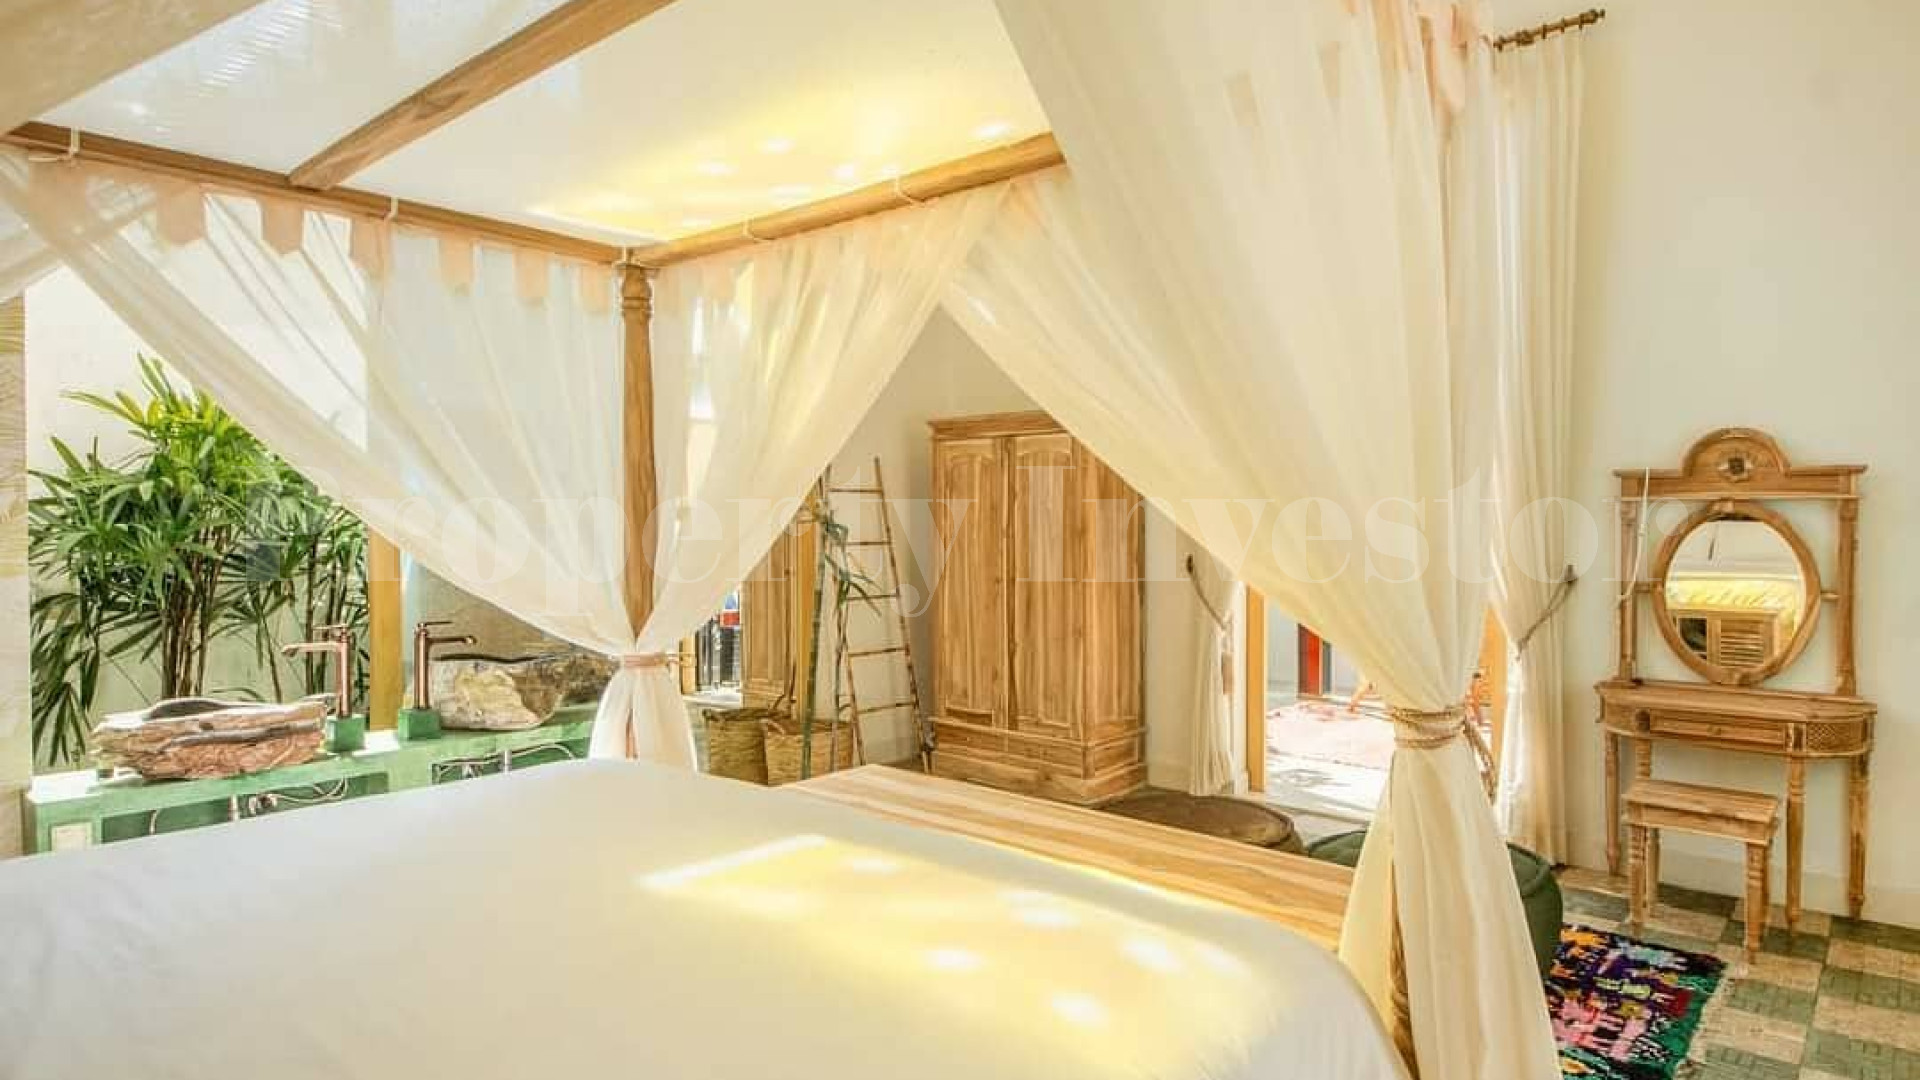 Beautiful 2 Bedroom Moroccan Inspired Villa for Sale Near Seseh Beach, Bali